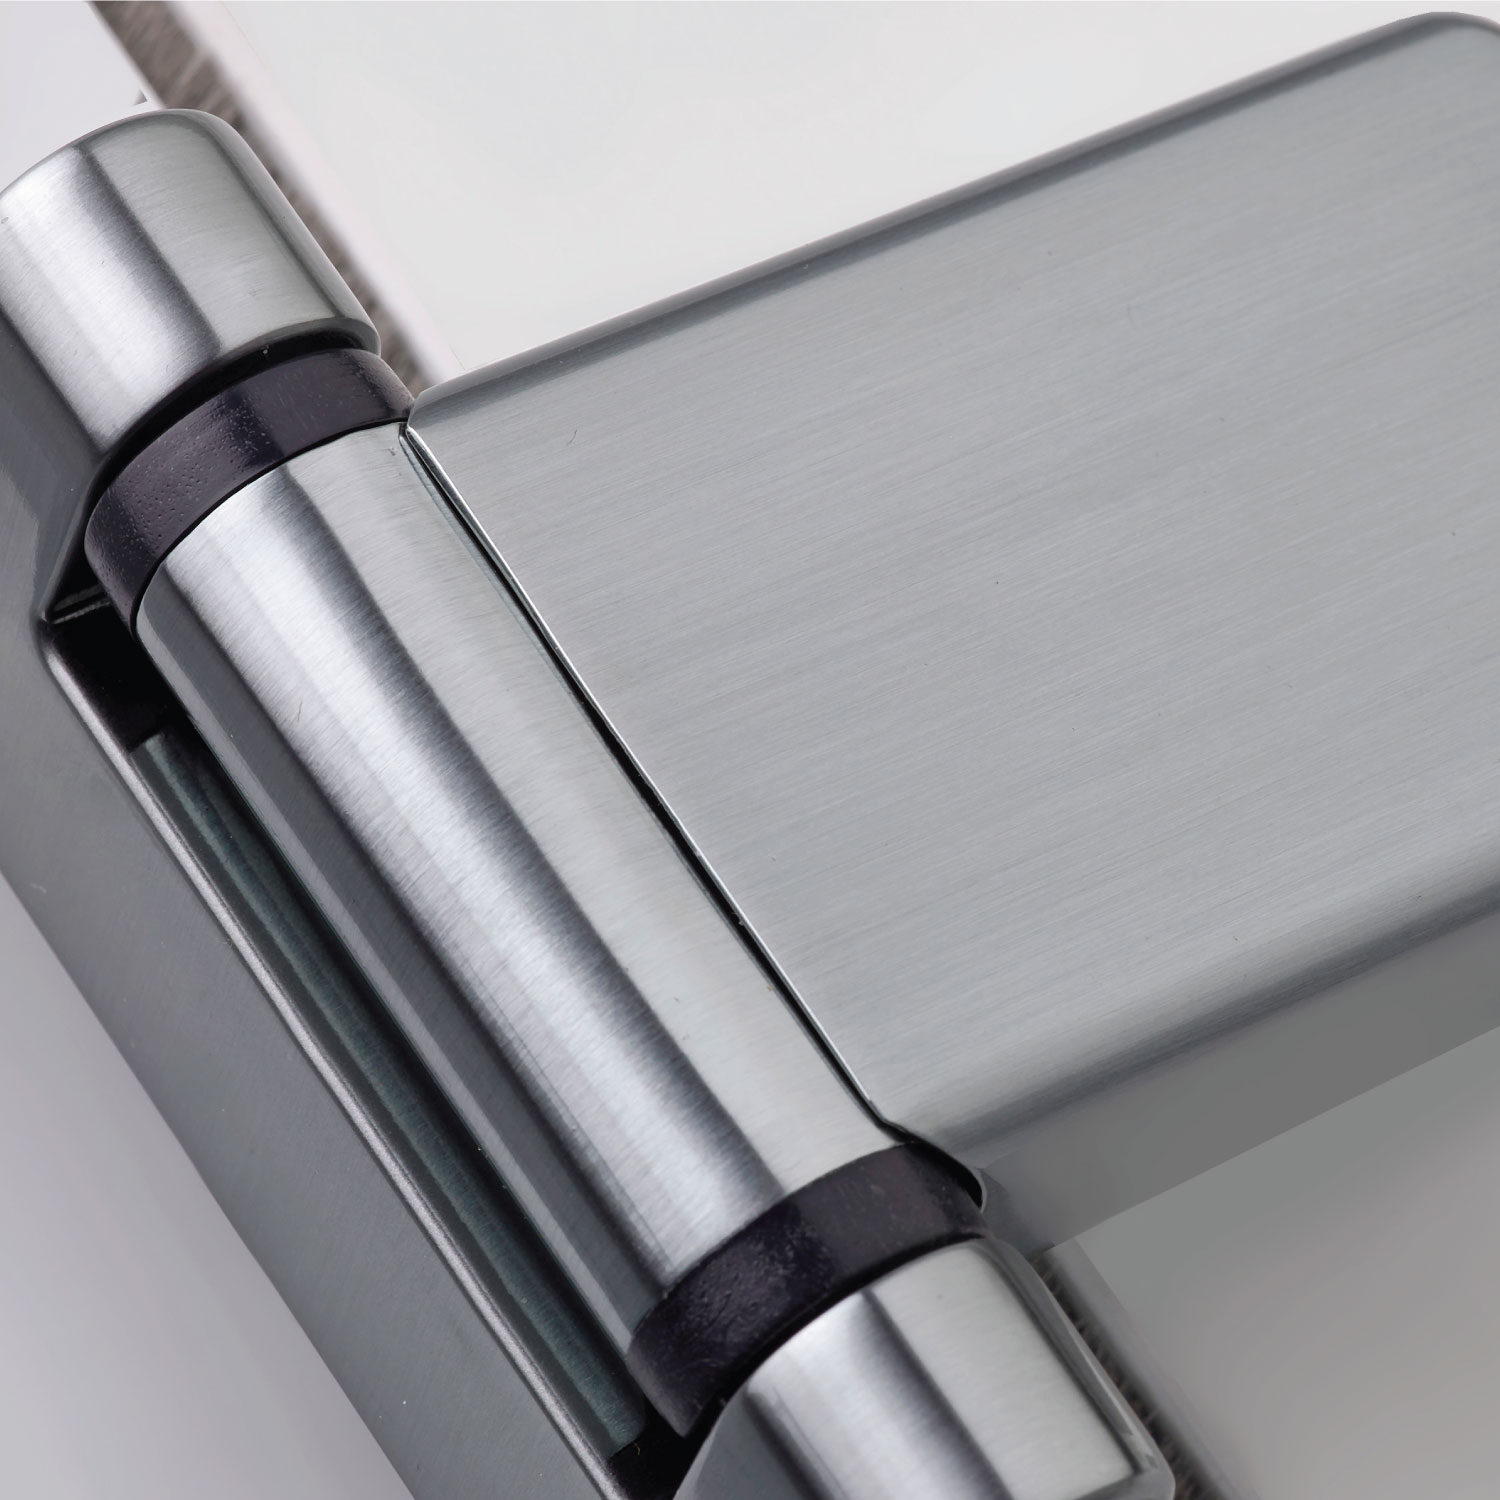 ERA announces the launch of its fast-fit Fab&Fix Classic PVCu door hinge, designed for all major PVCu door profiles. 